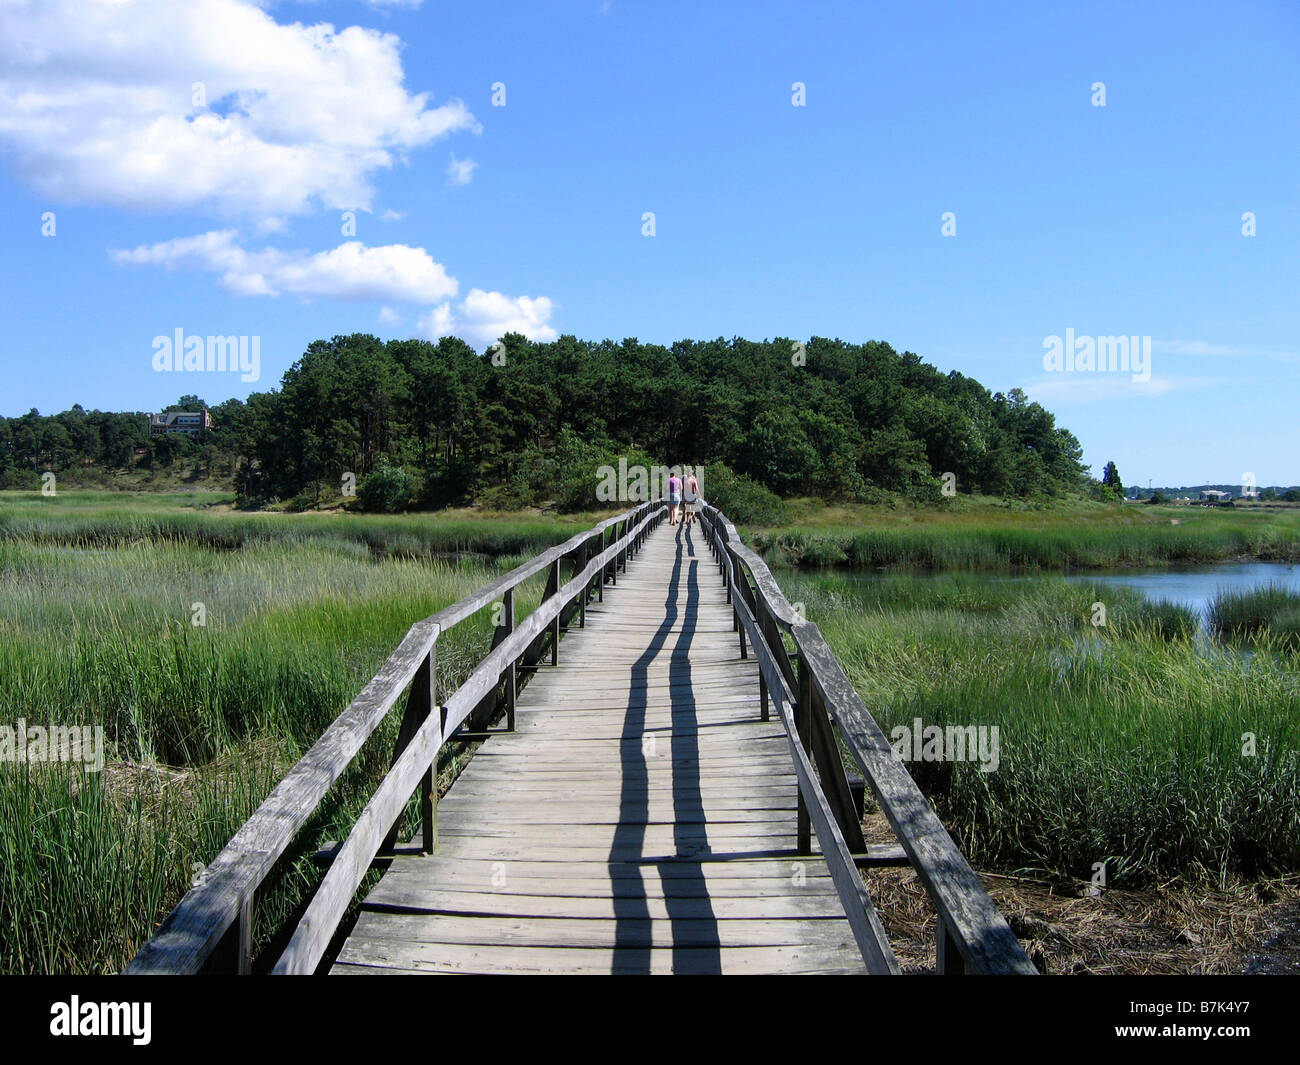 Onkel Tims Brücke kreuzt über Duck Creek in Wellfleet Massachusetts Verbindung mit Kanone Insel. Stockfoto